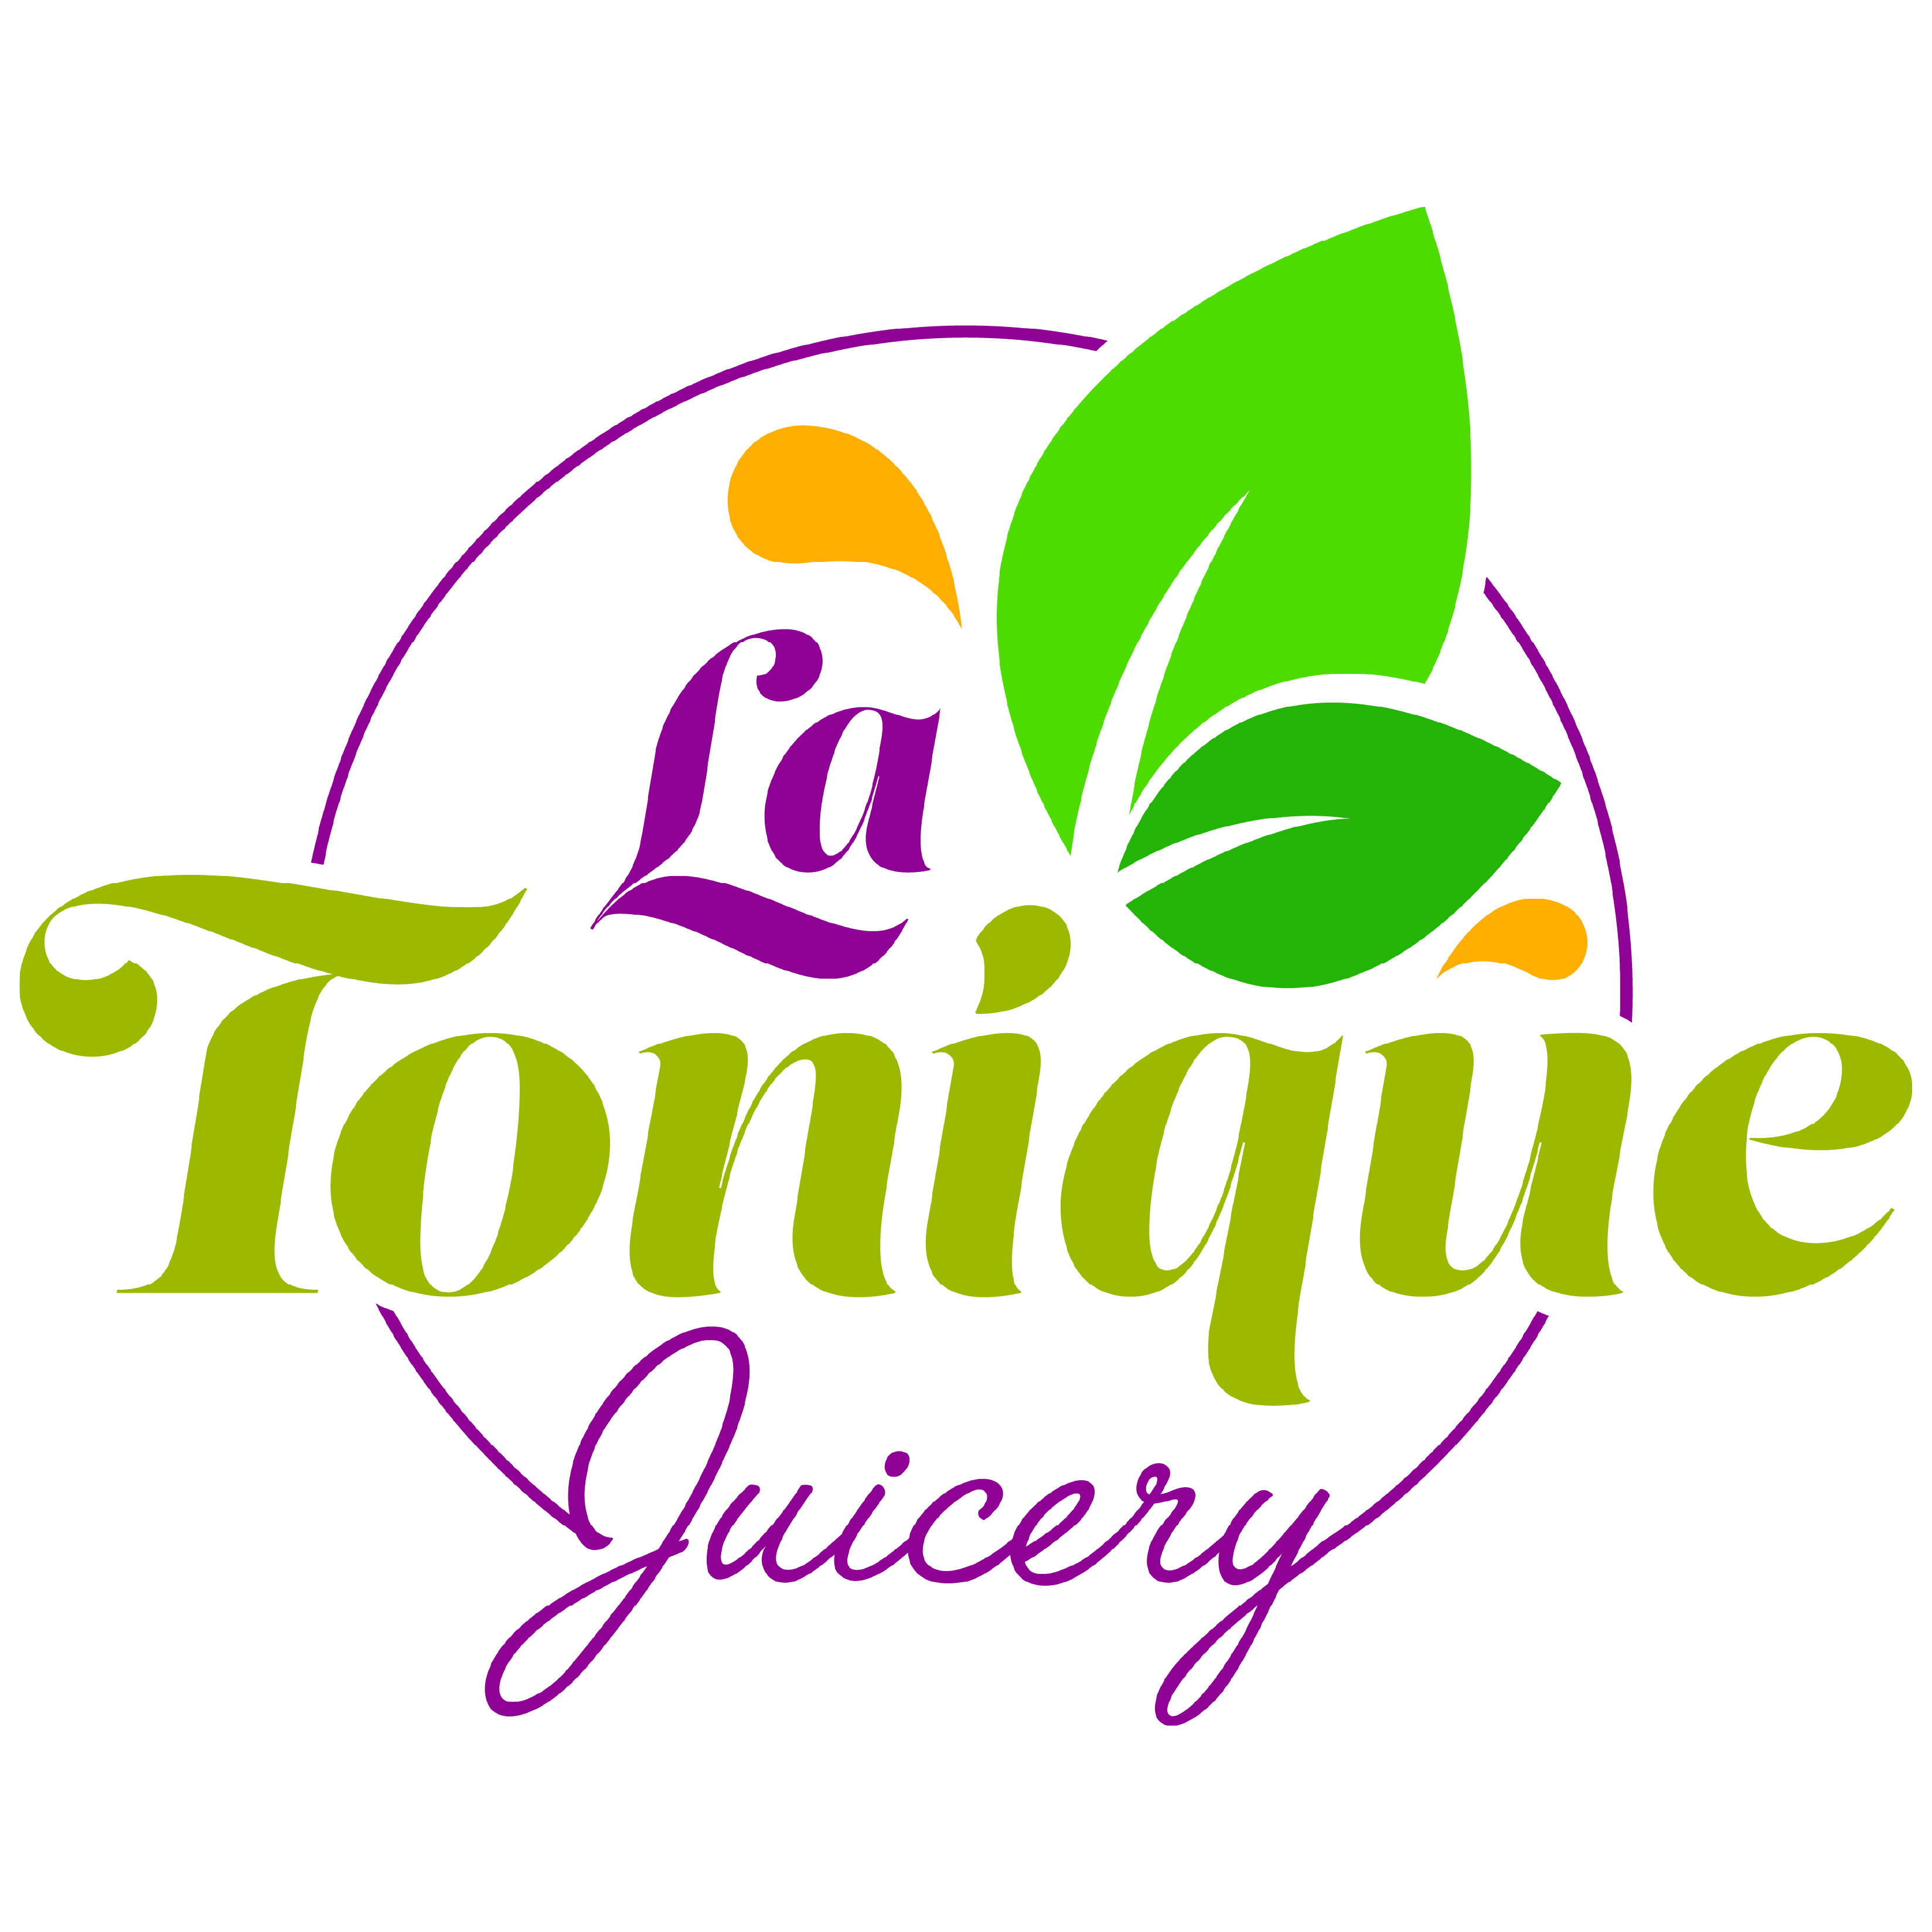 Latonique app logo